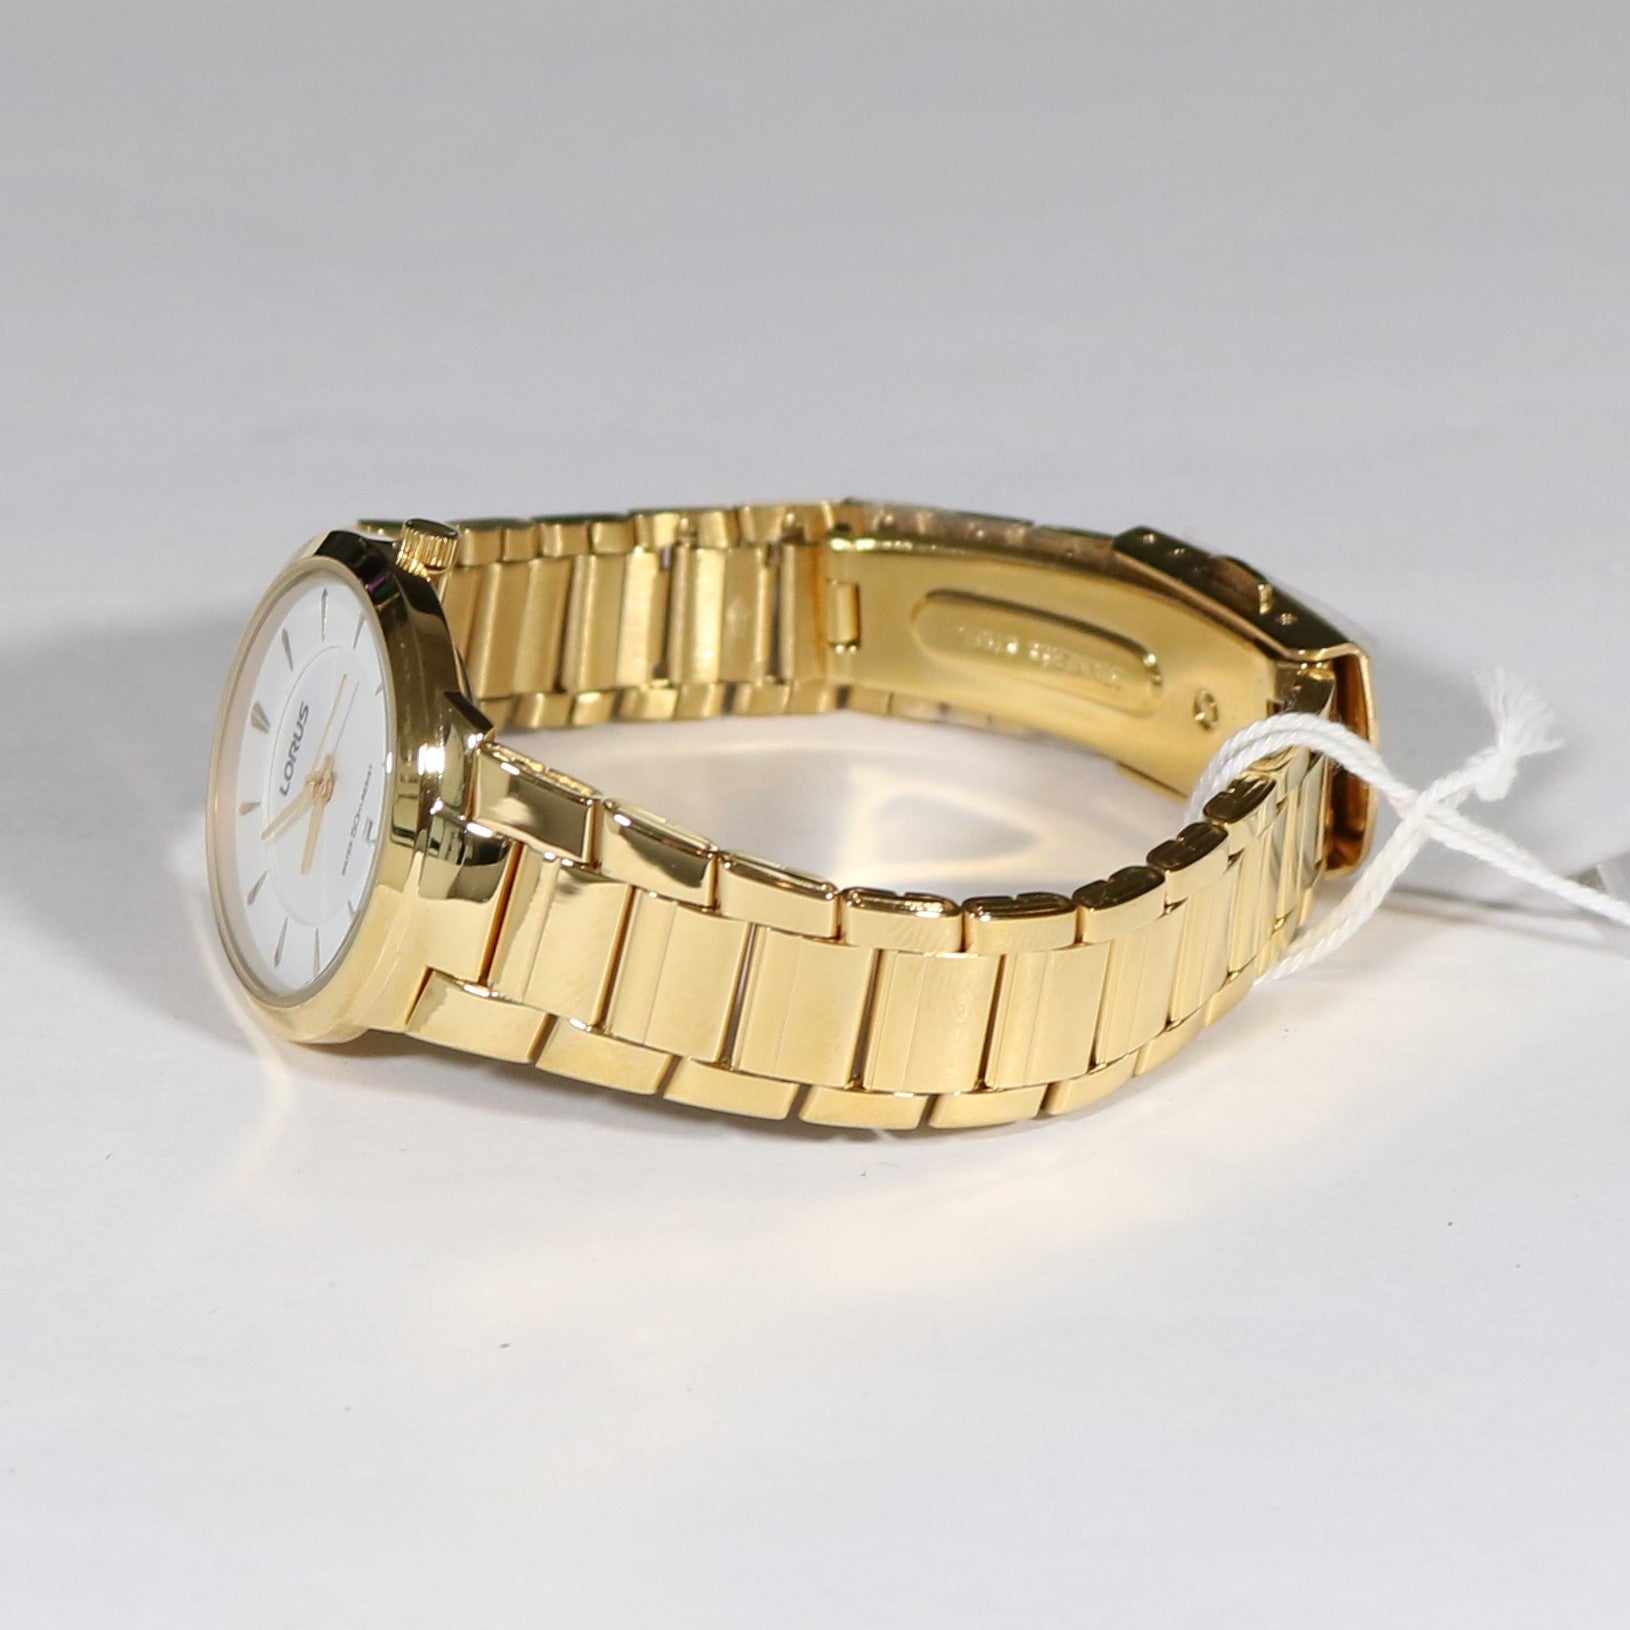 – Chronobuy Stainless Steel Women\'s Tone RH760AX9 Dress Quartz Watch Gold Lorus